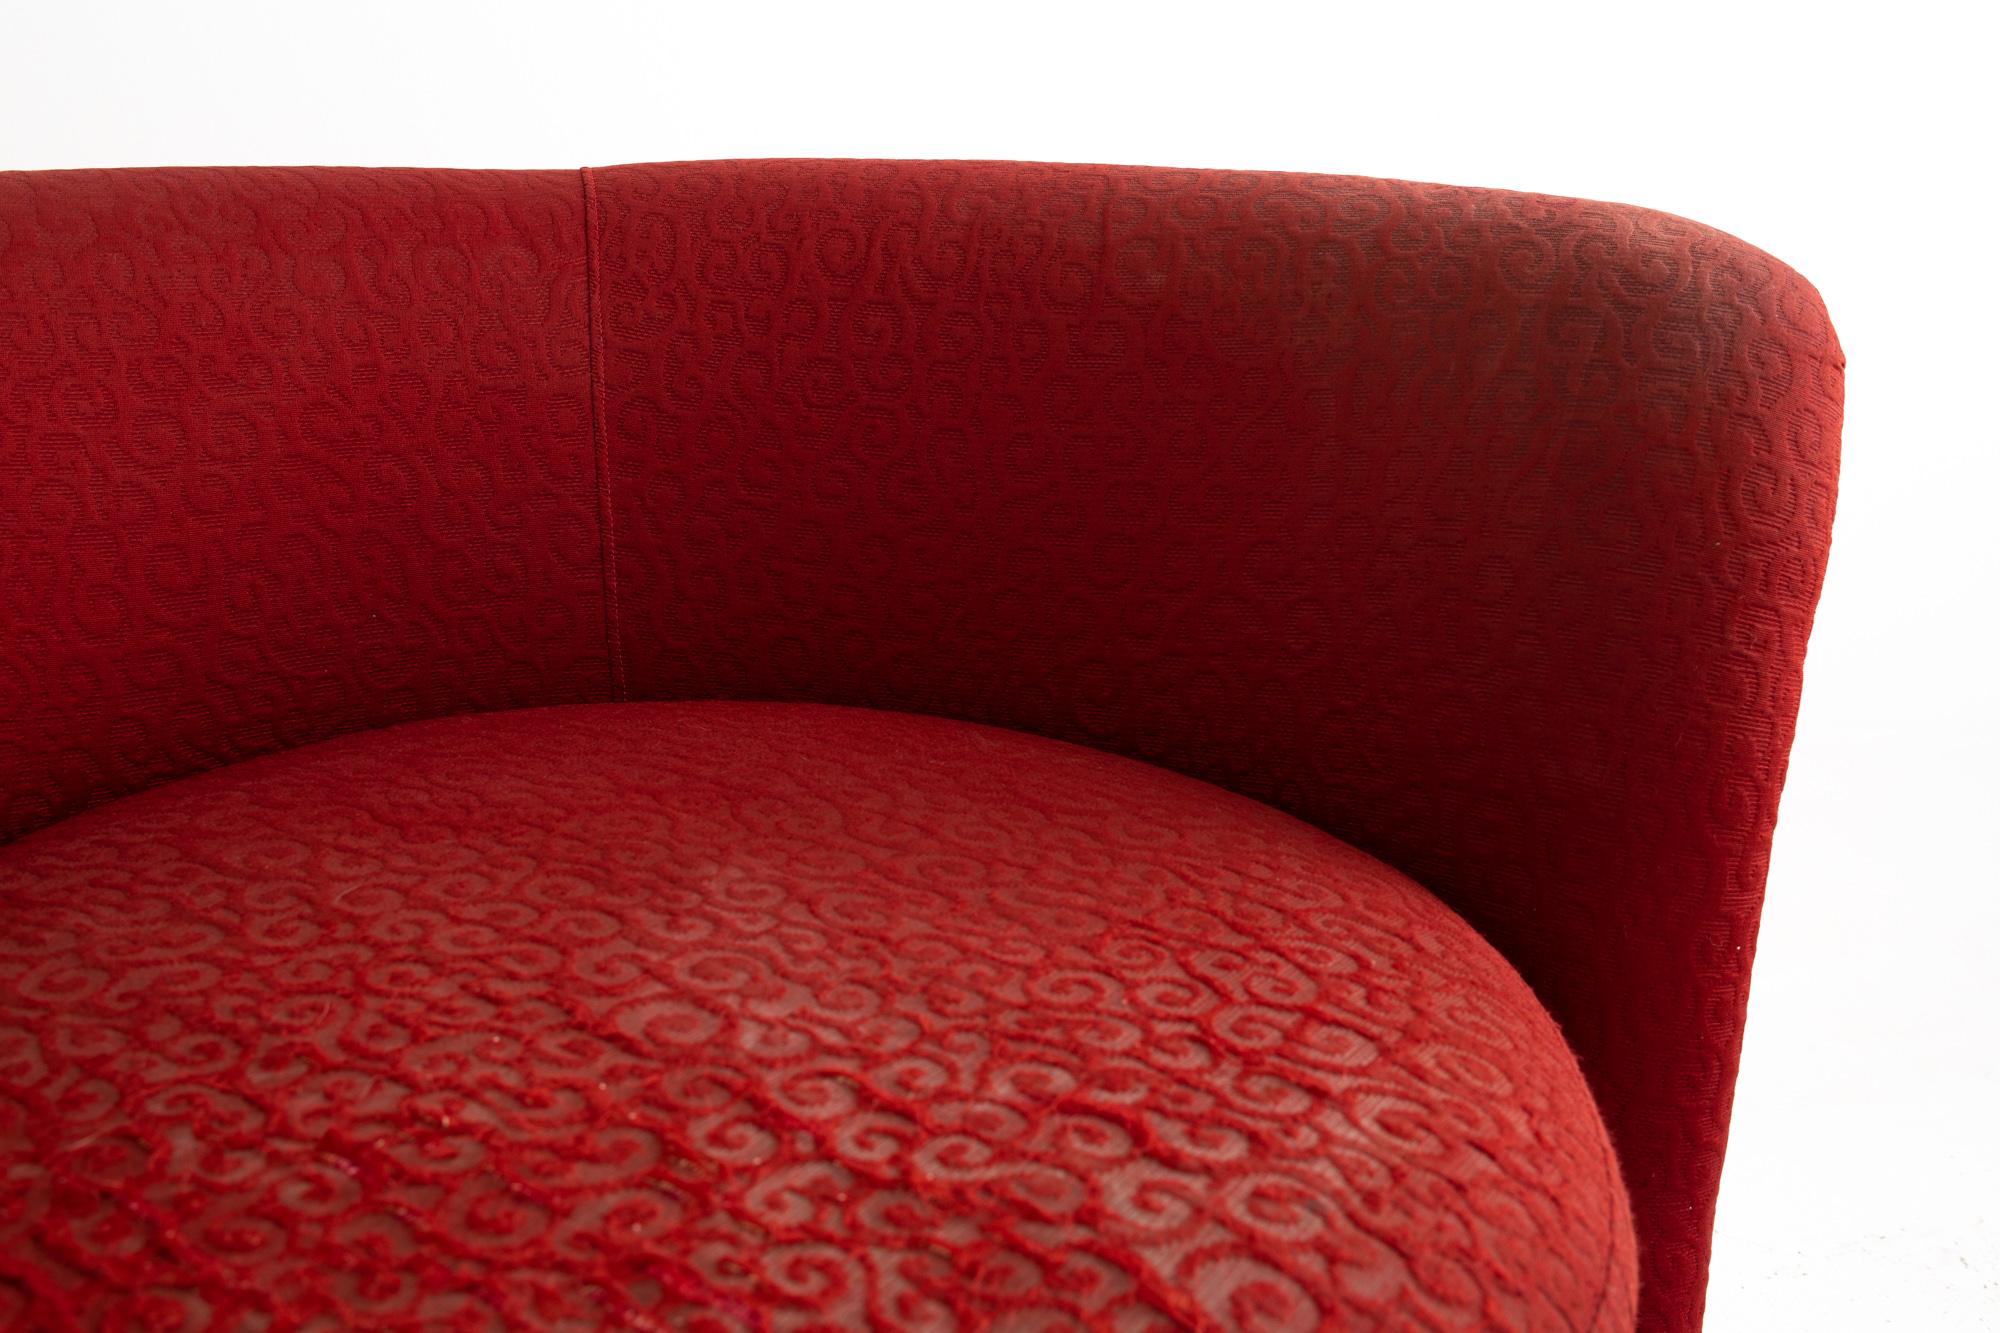 Upholstery Milo Baughman for Thayer Coggin Midcentury Tete-a-tete Settee Loveseat Sofa